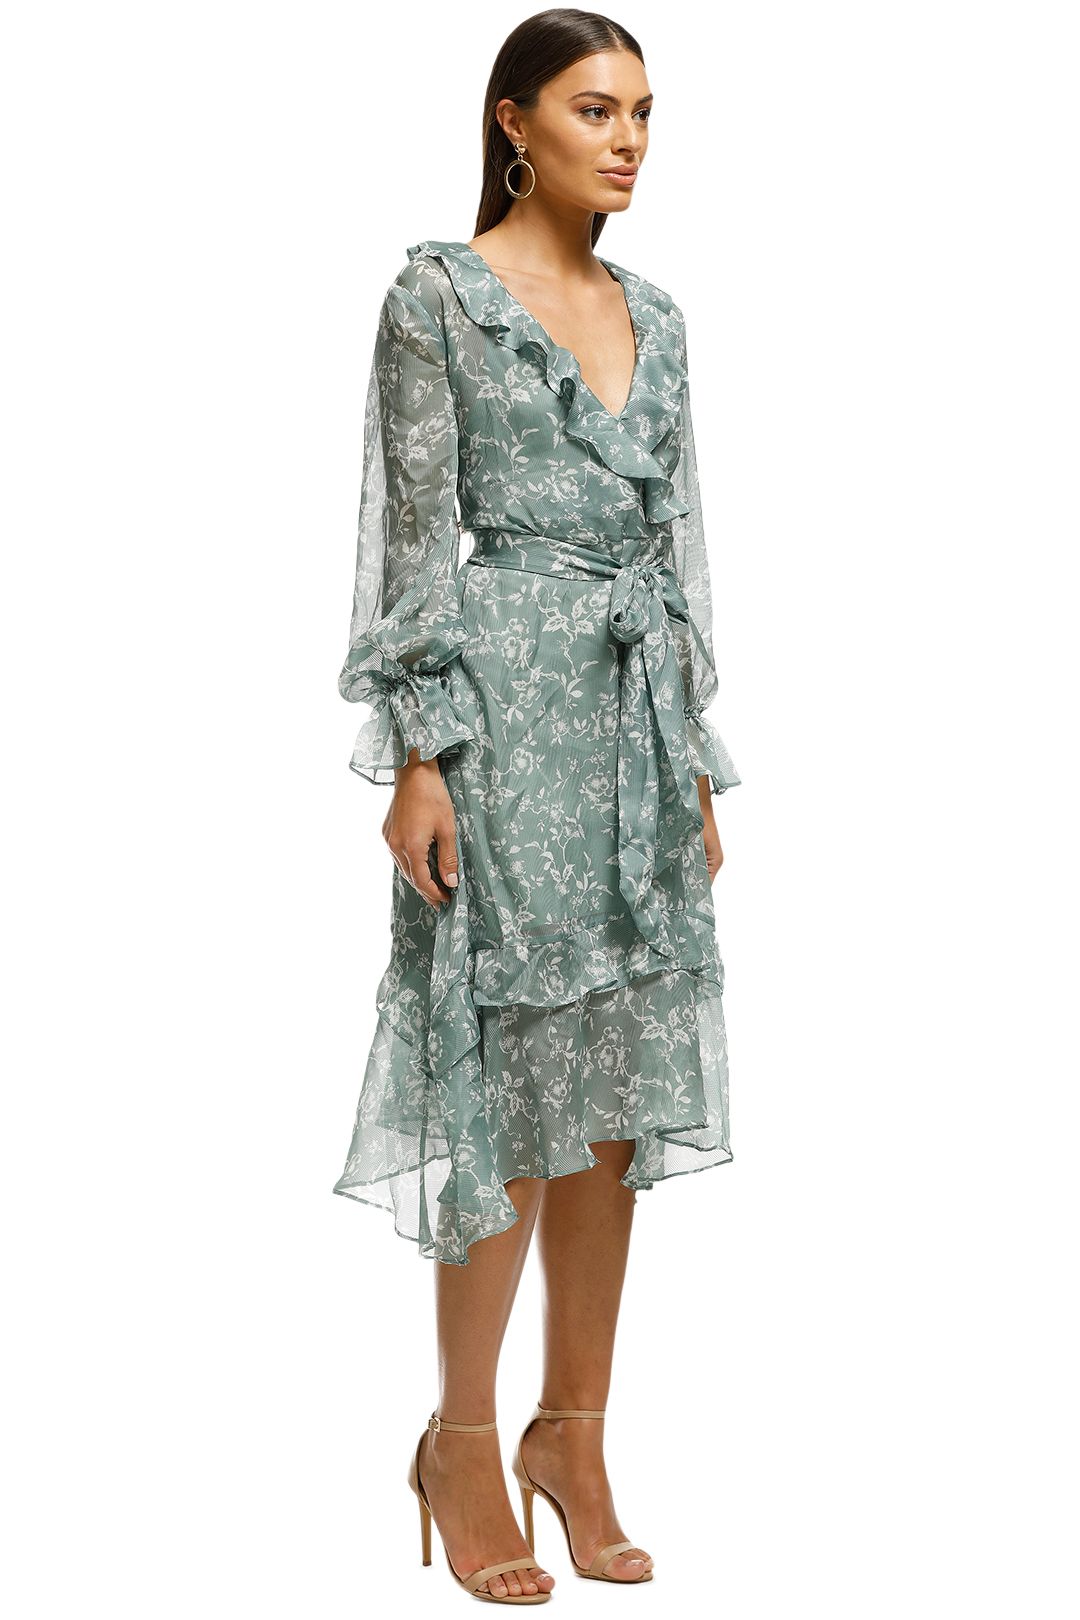 Keepsake the Label - Cheshire Dress - Sage Floral - Side